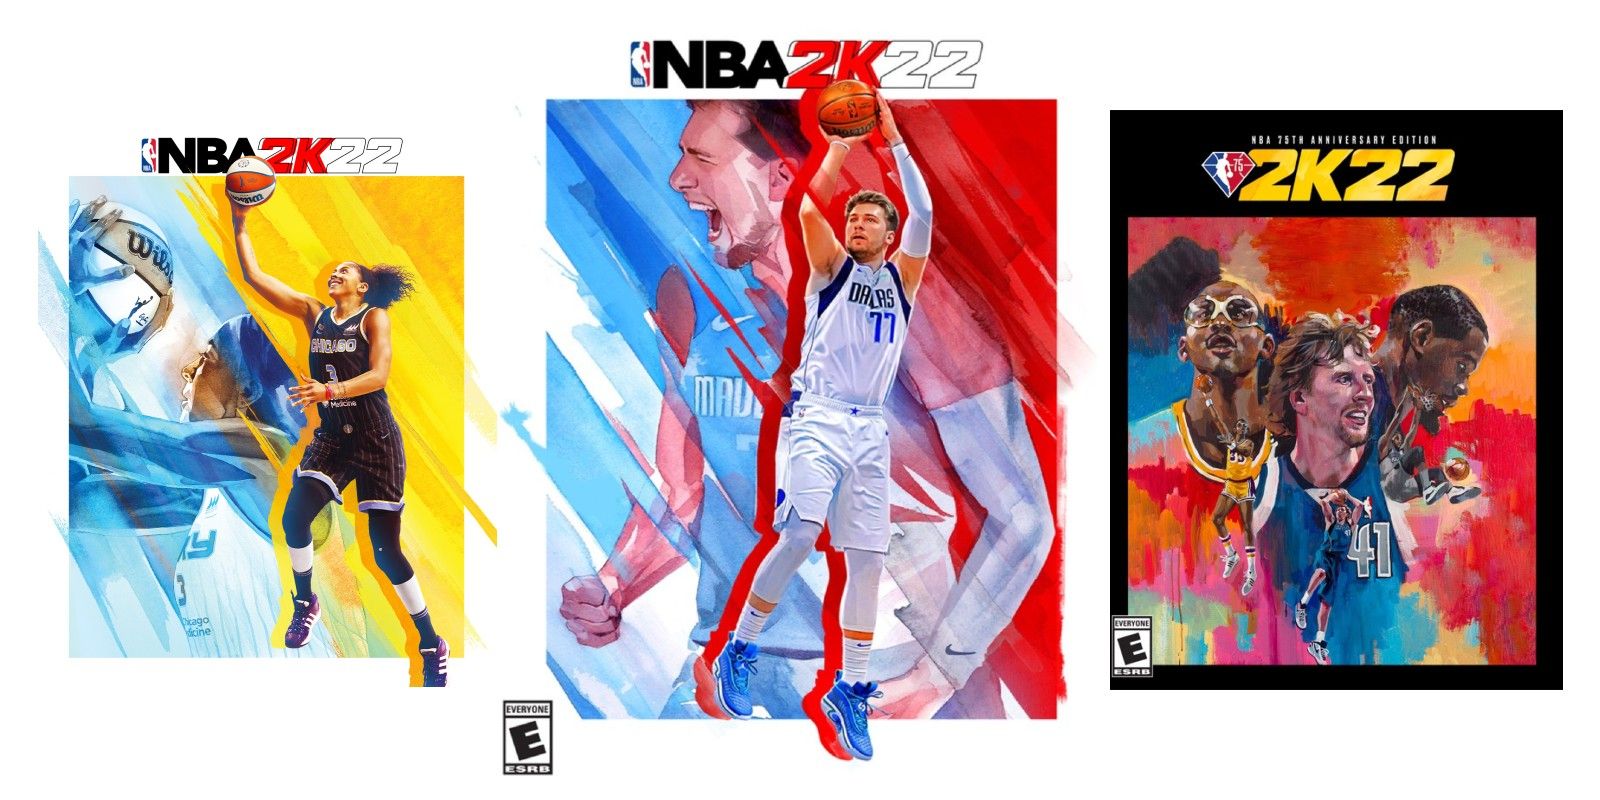 NBA 2k22 covers